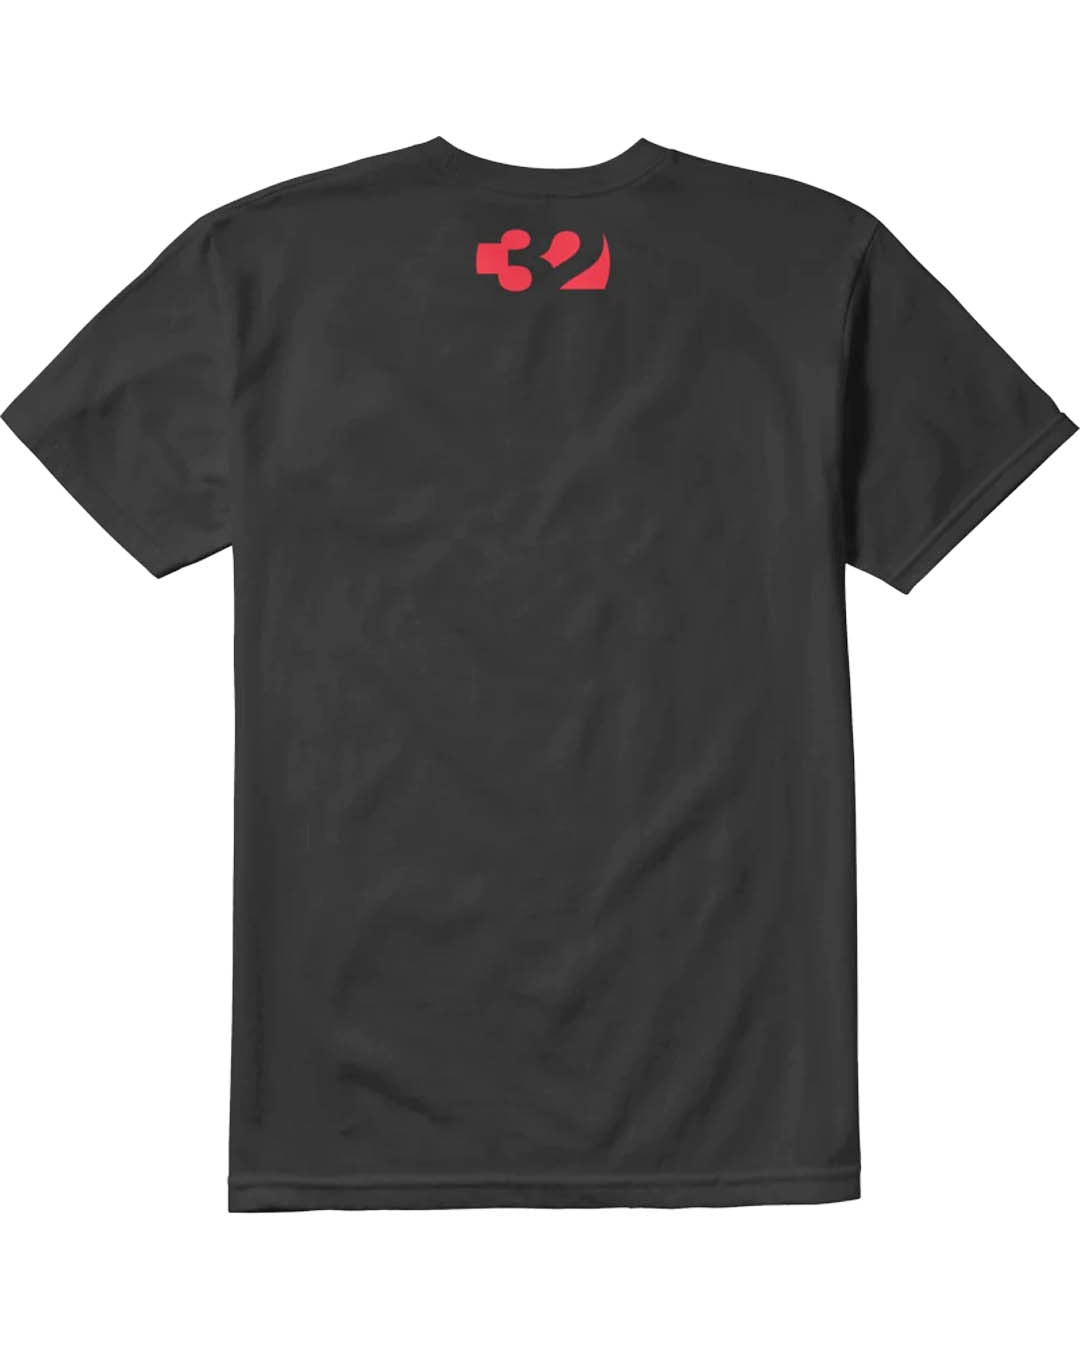 Zeb Signature T-Shirt - Black